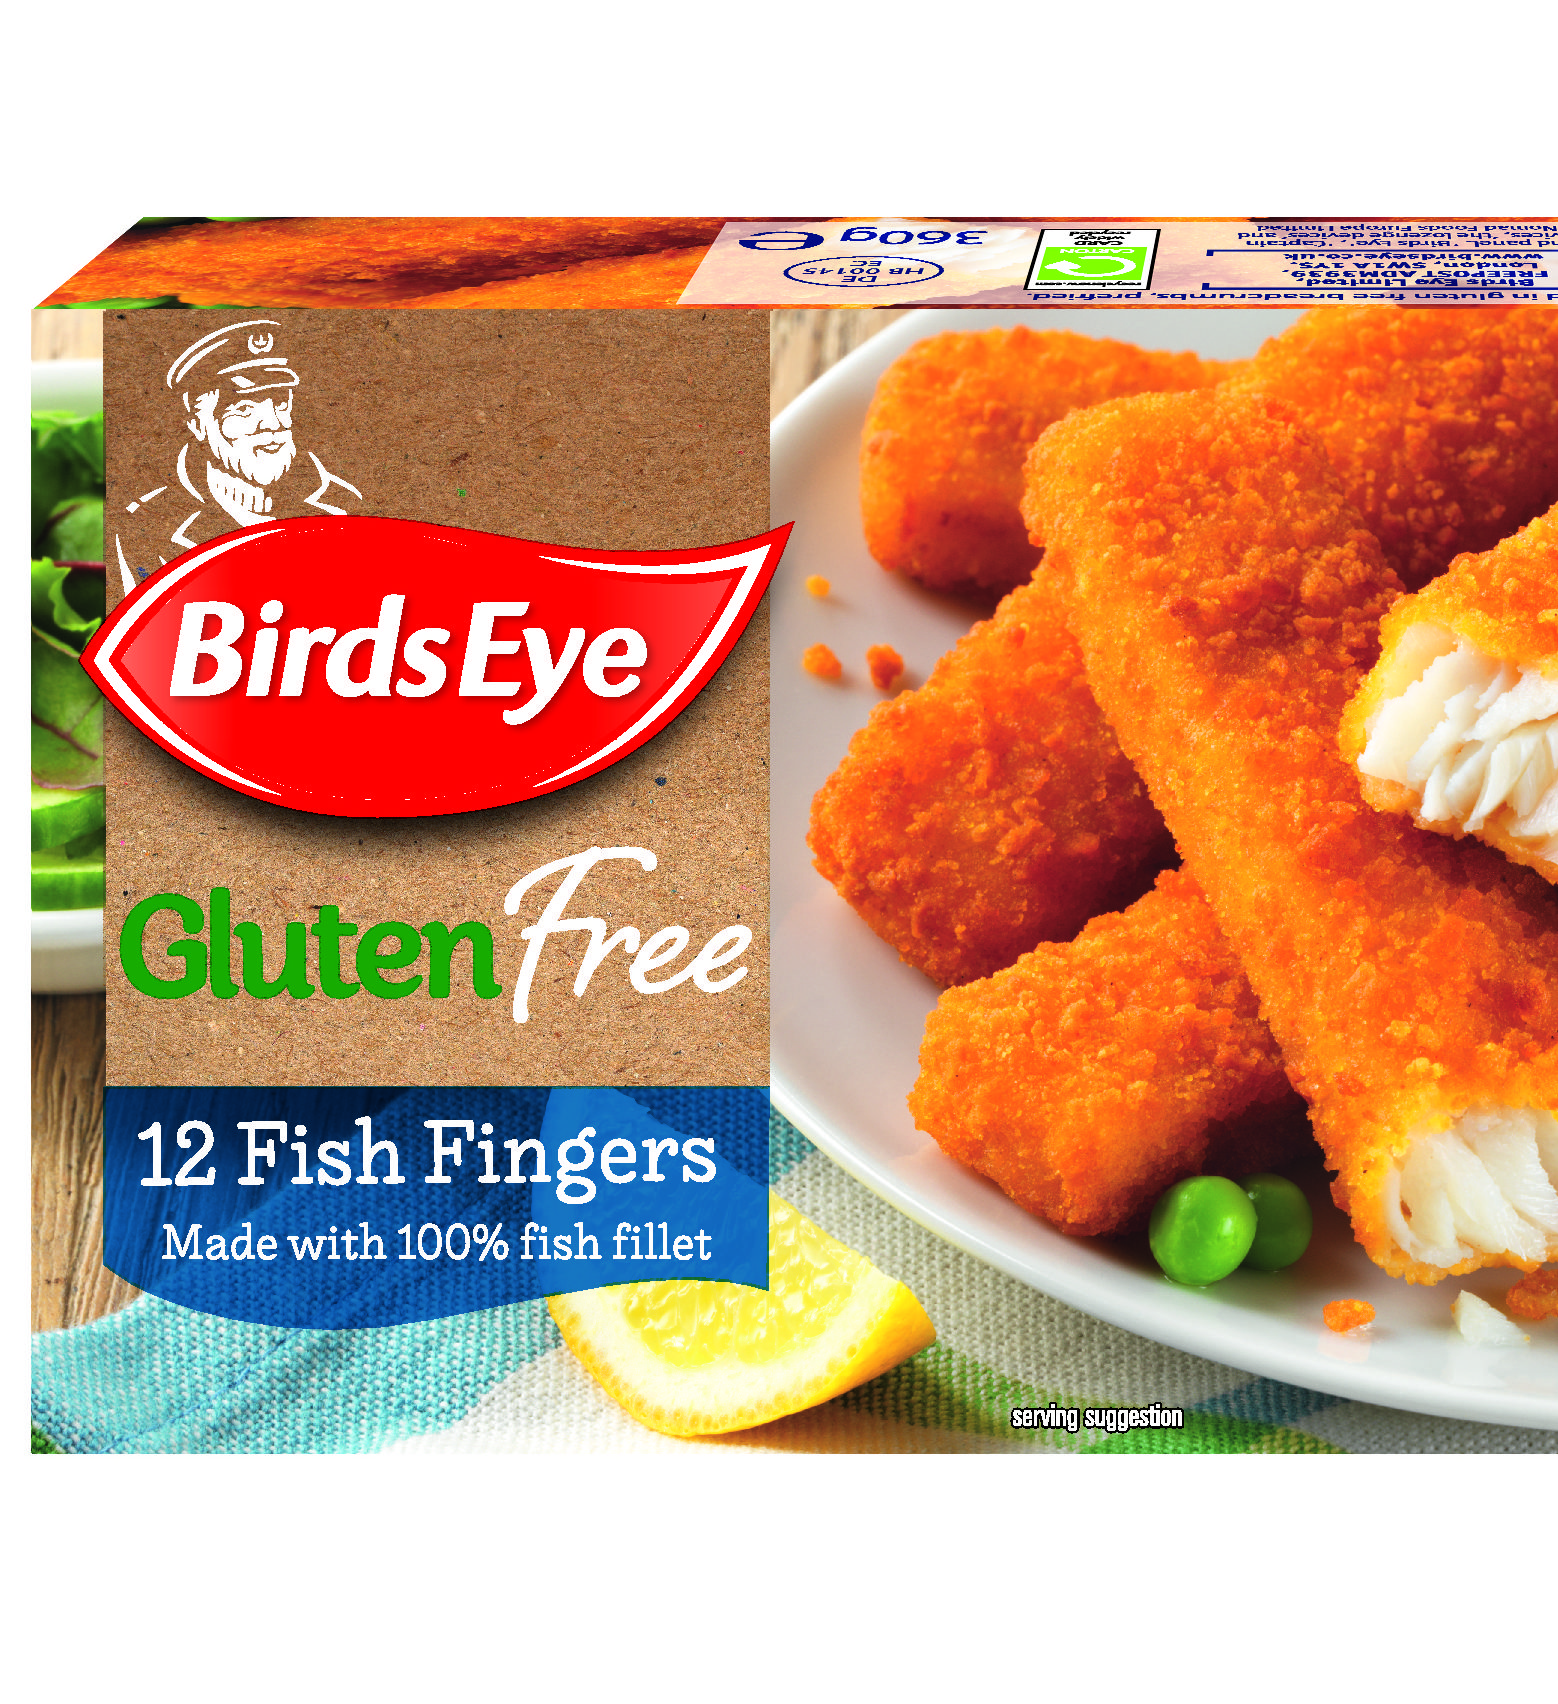 Birds Eye introduces gluten free fish fingers - Undercurrent News